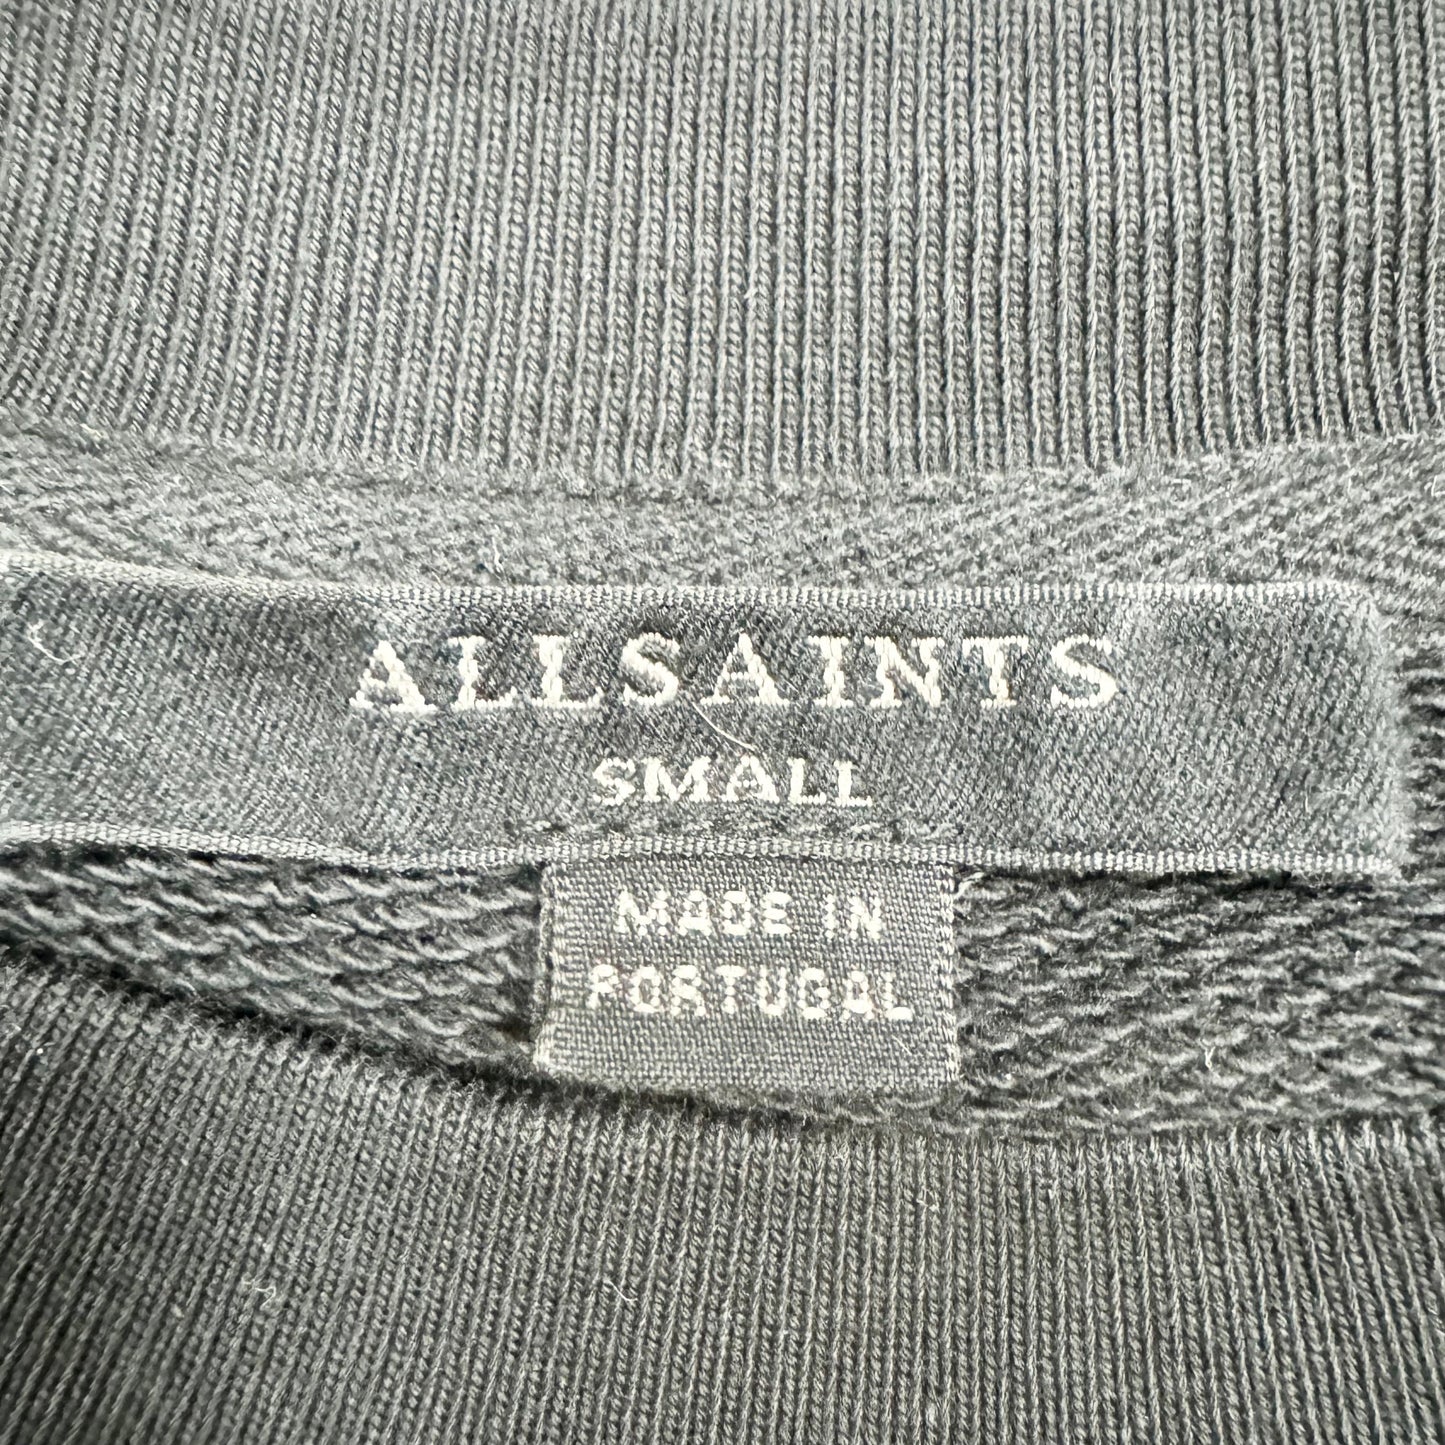 Sweatshirt Designer By All Saints  Size: S